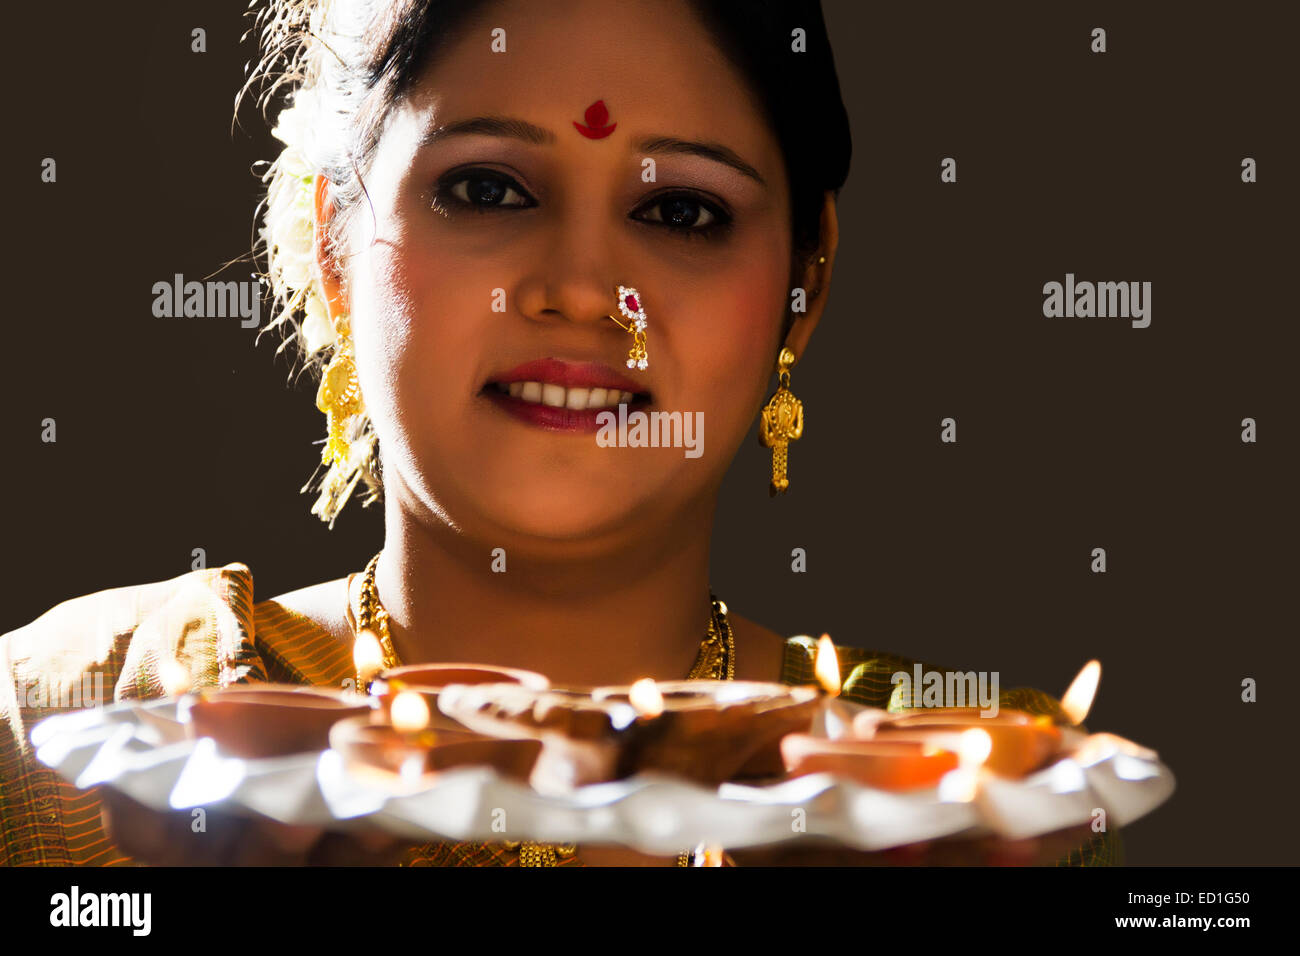 1 South  indian Lady Worship  Diwali  Festival Stock Photo